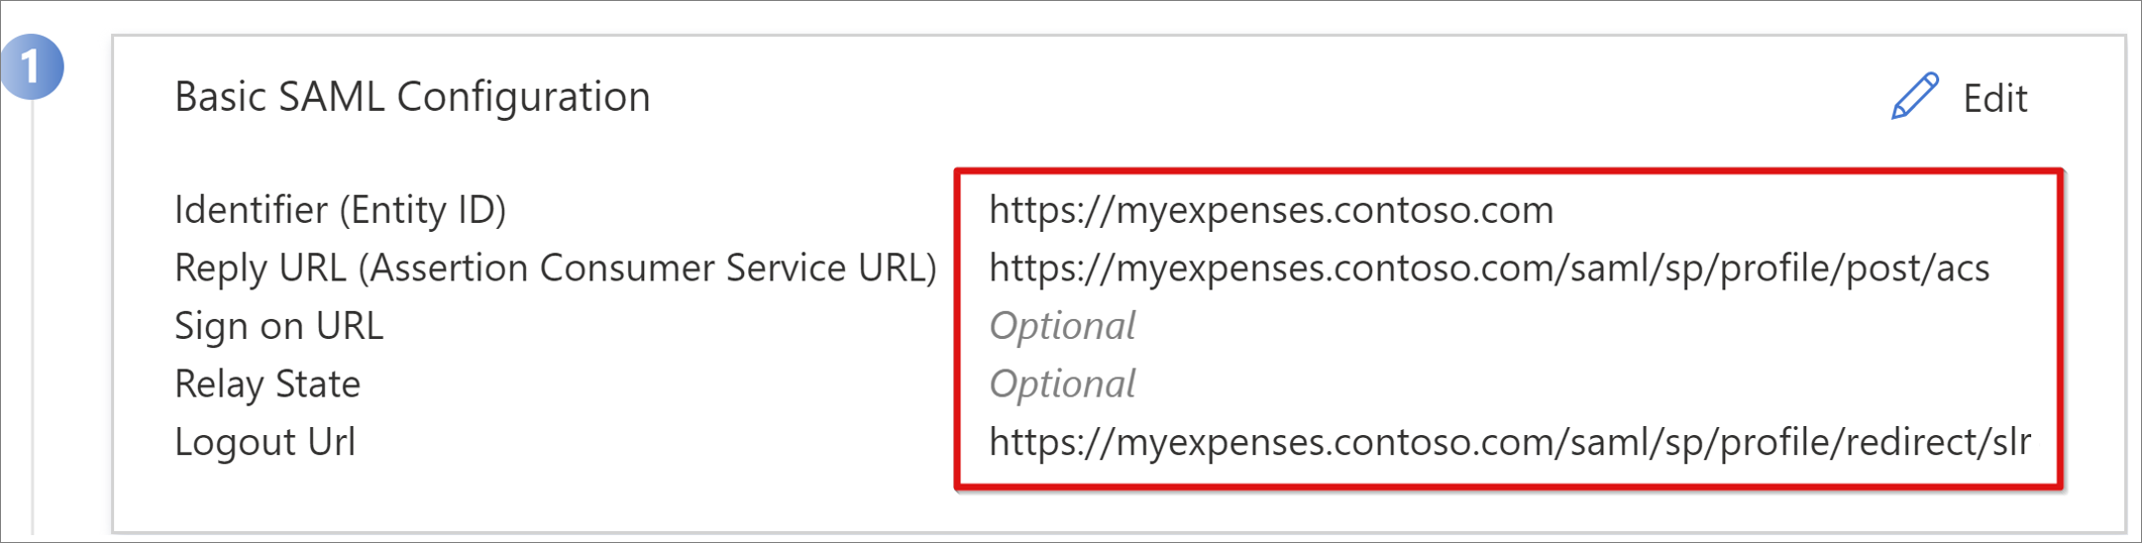 Screenshot of URL entries in Basic SAML Configuration.